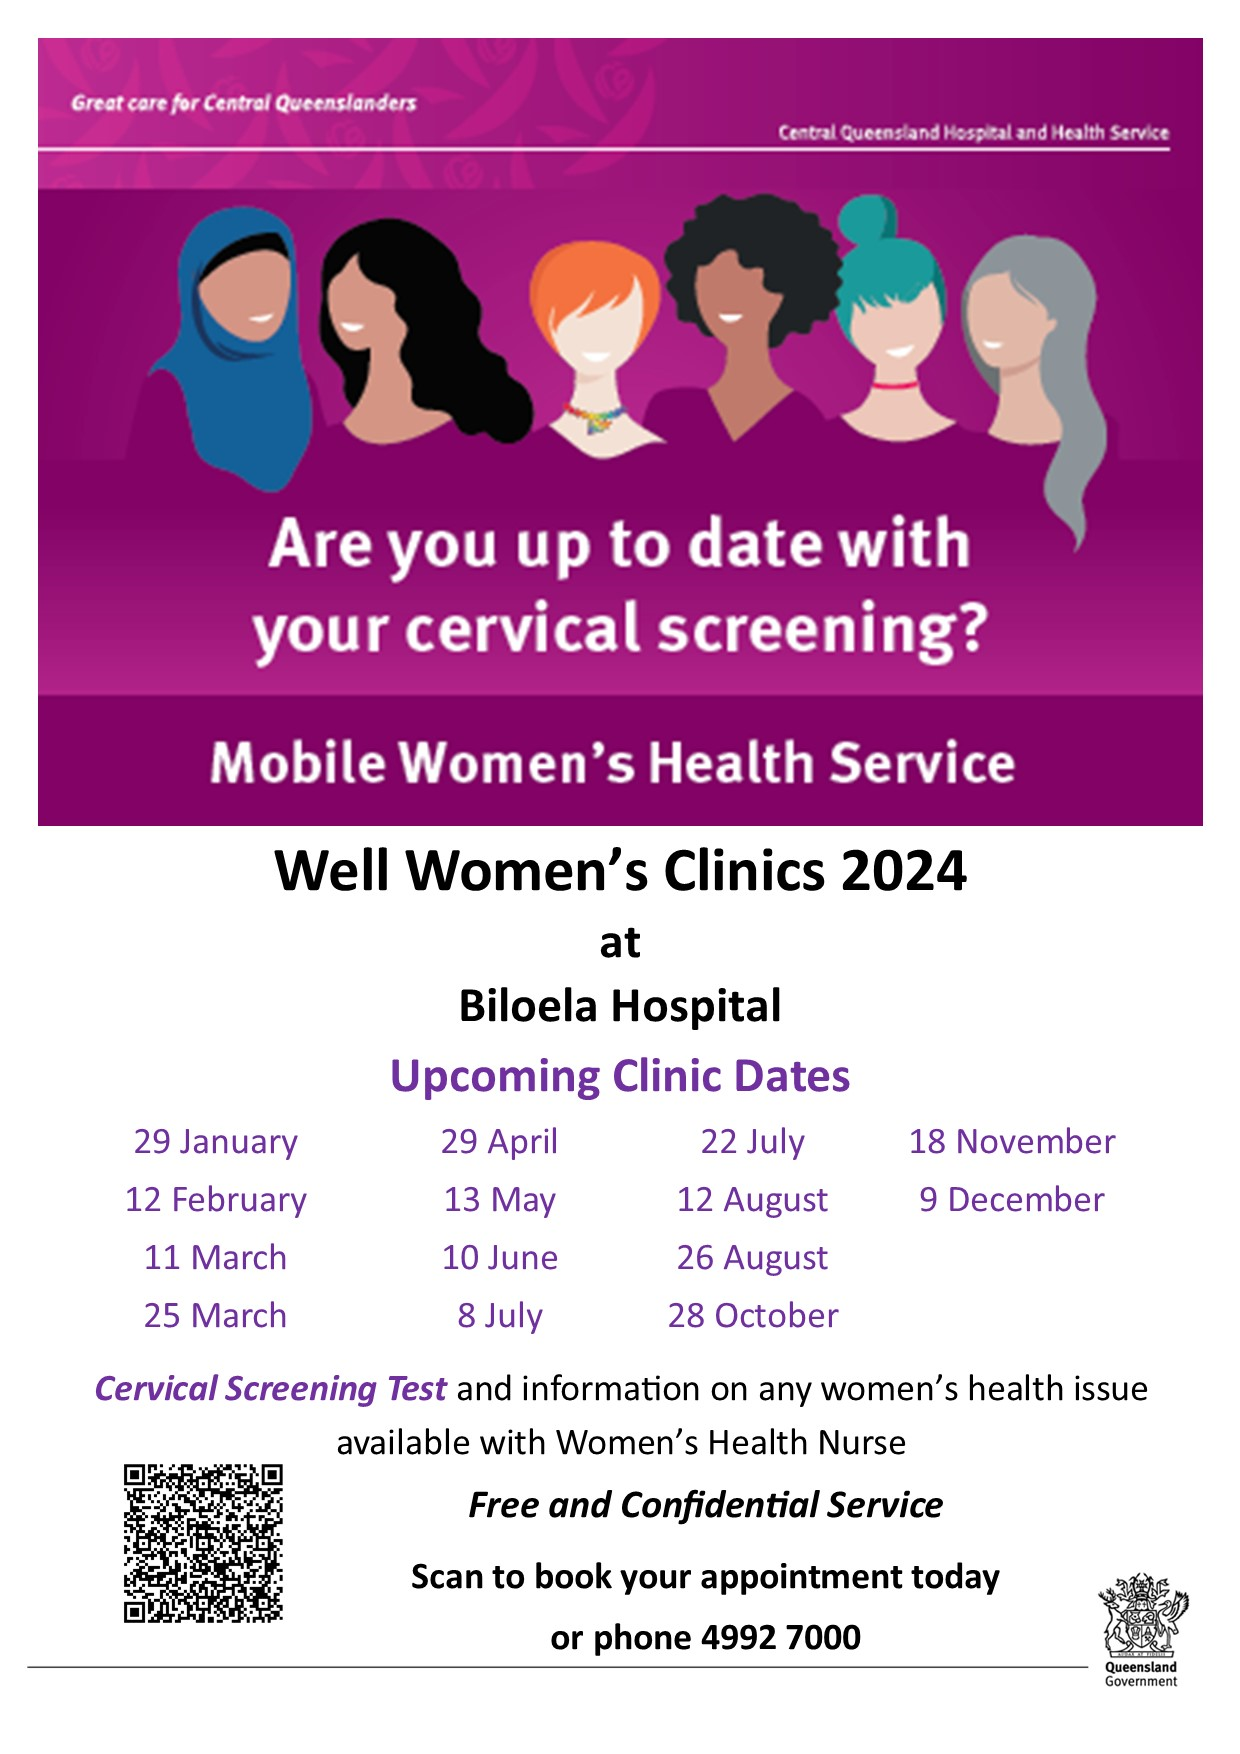 Mobile Women's Health Service - Well Women's Clinics 2024 - Biloela Hospital